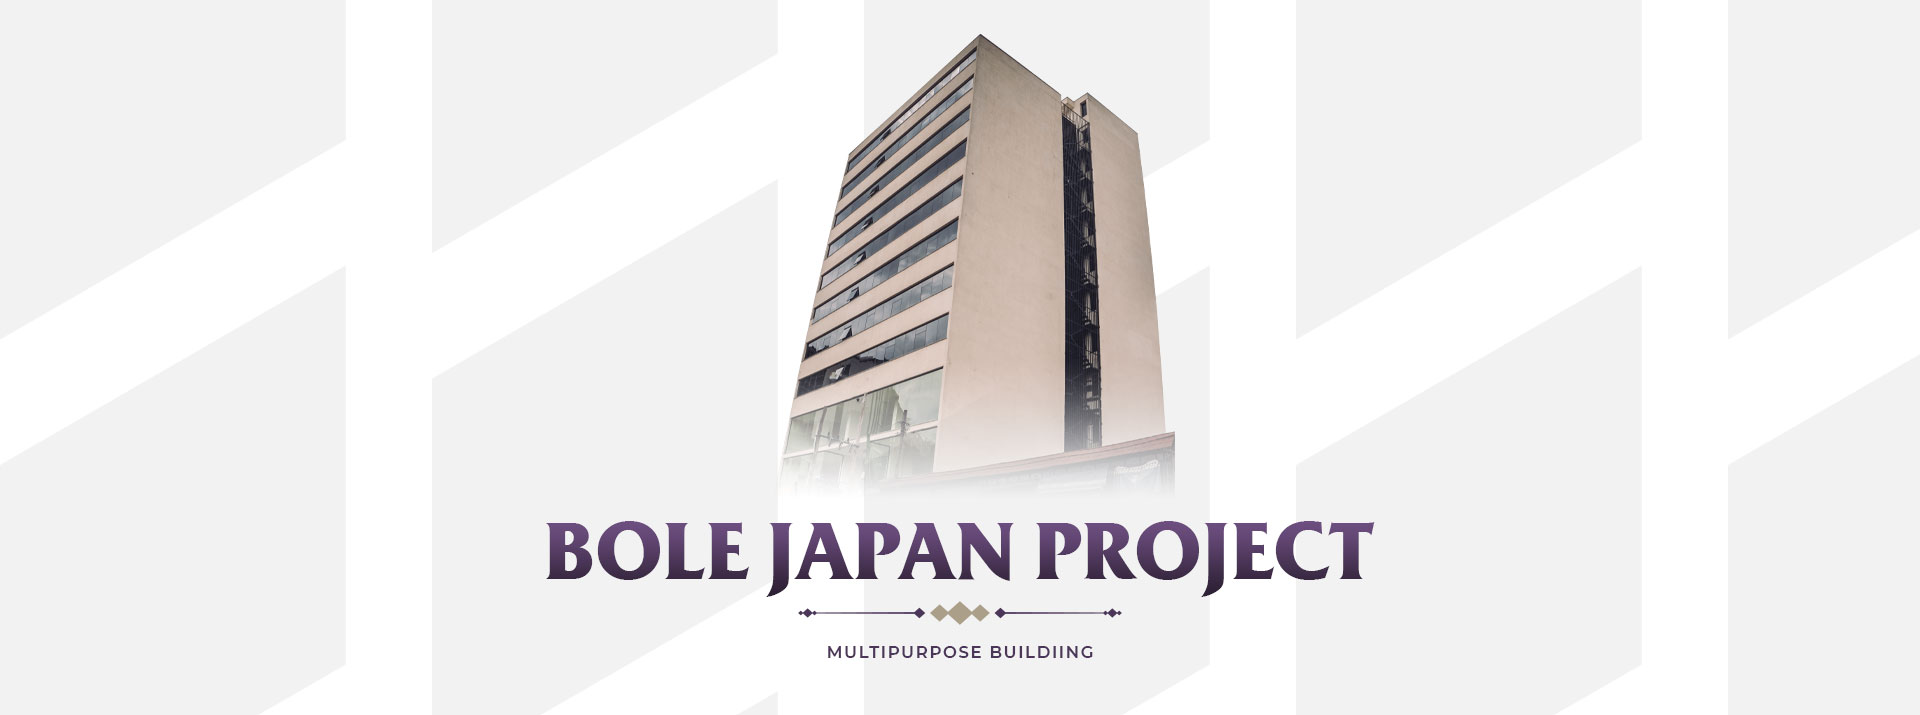 Bole-Japan-Project-Slider-Photo-2.jpg